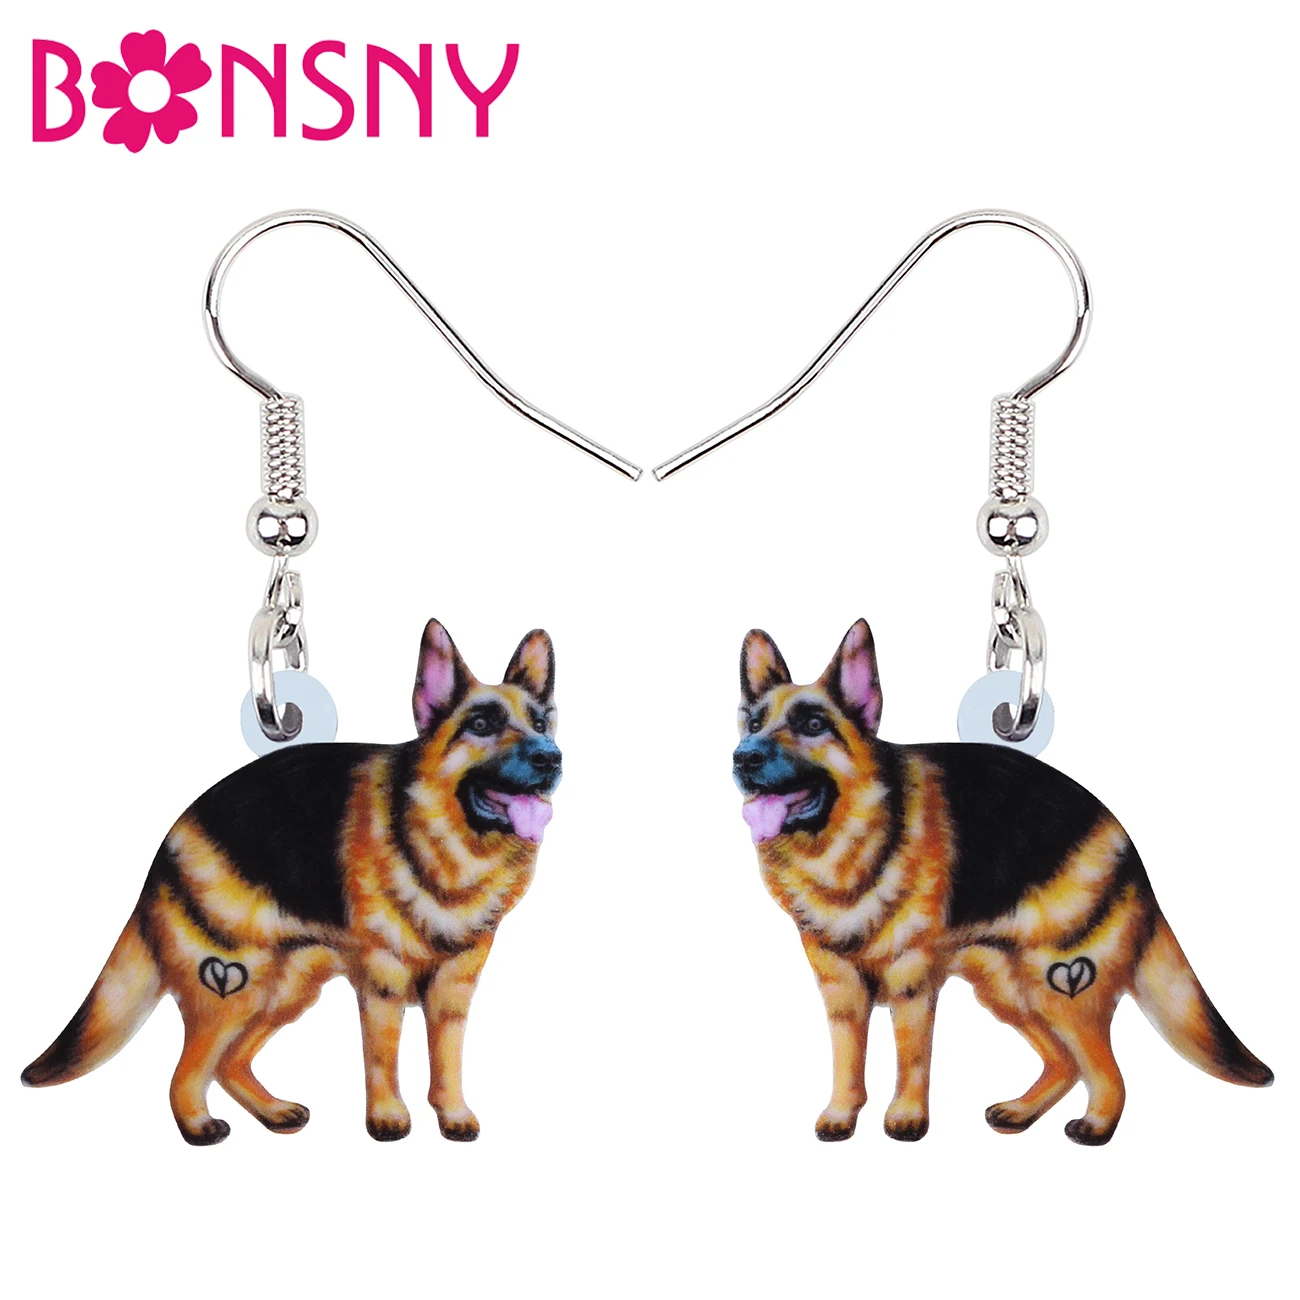 

Bonsny Acrylic Cute German Shepherd Dog Earrings Drop Dangle Gifts Pets Fashion Jewelry for Women Girls Teens Charms Accessories